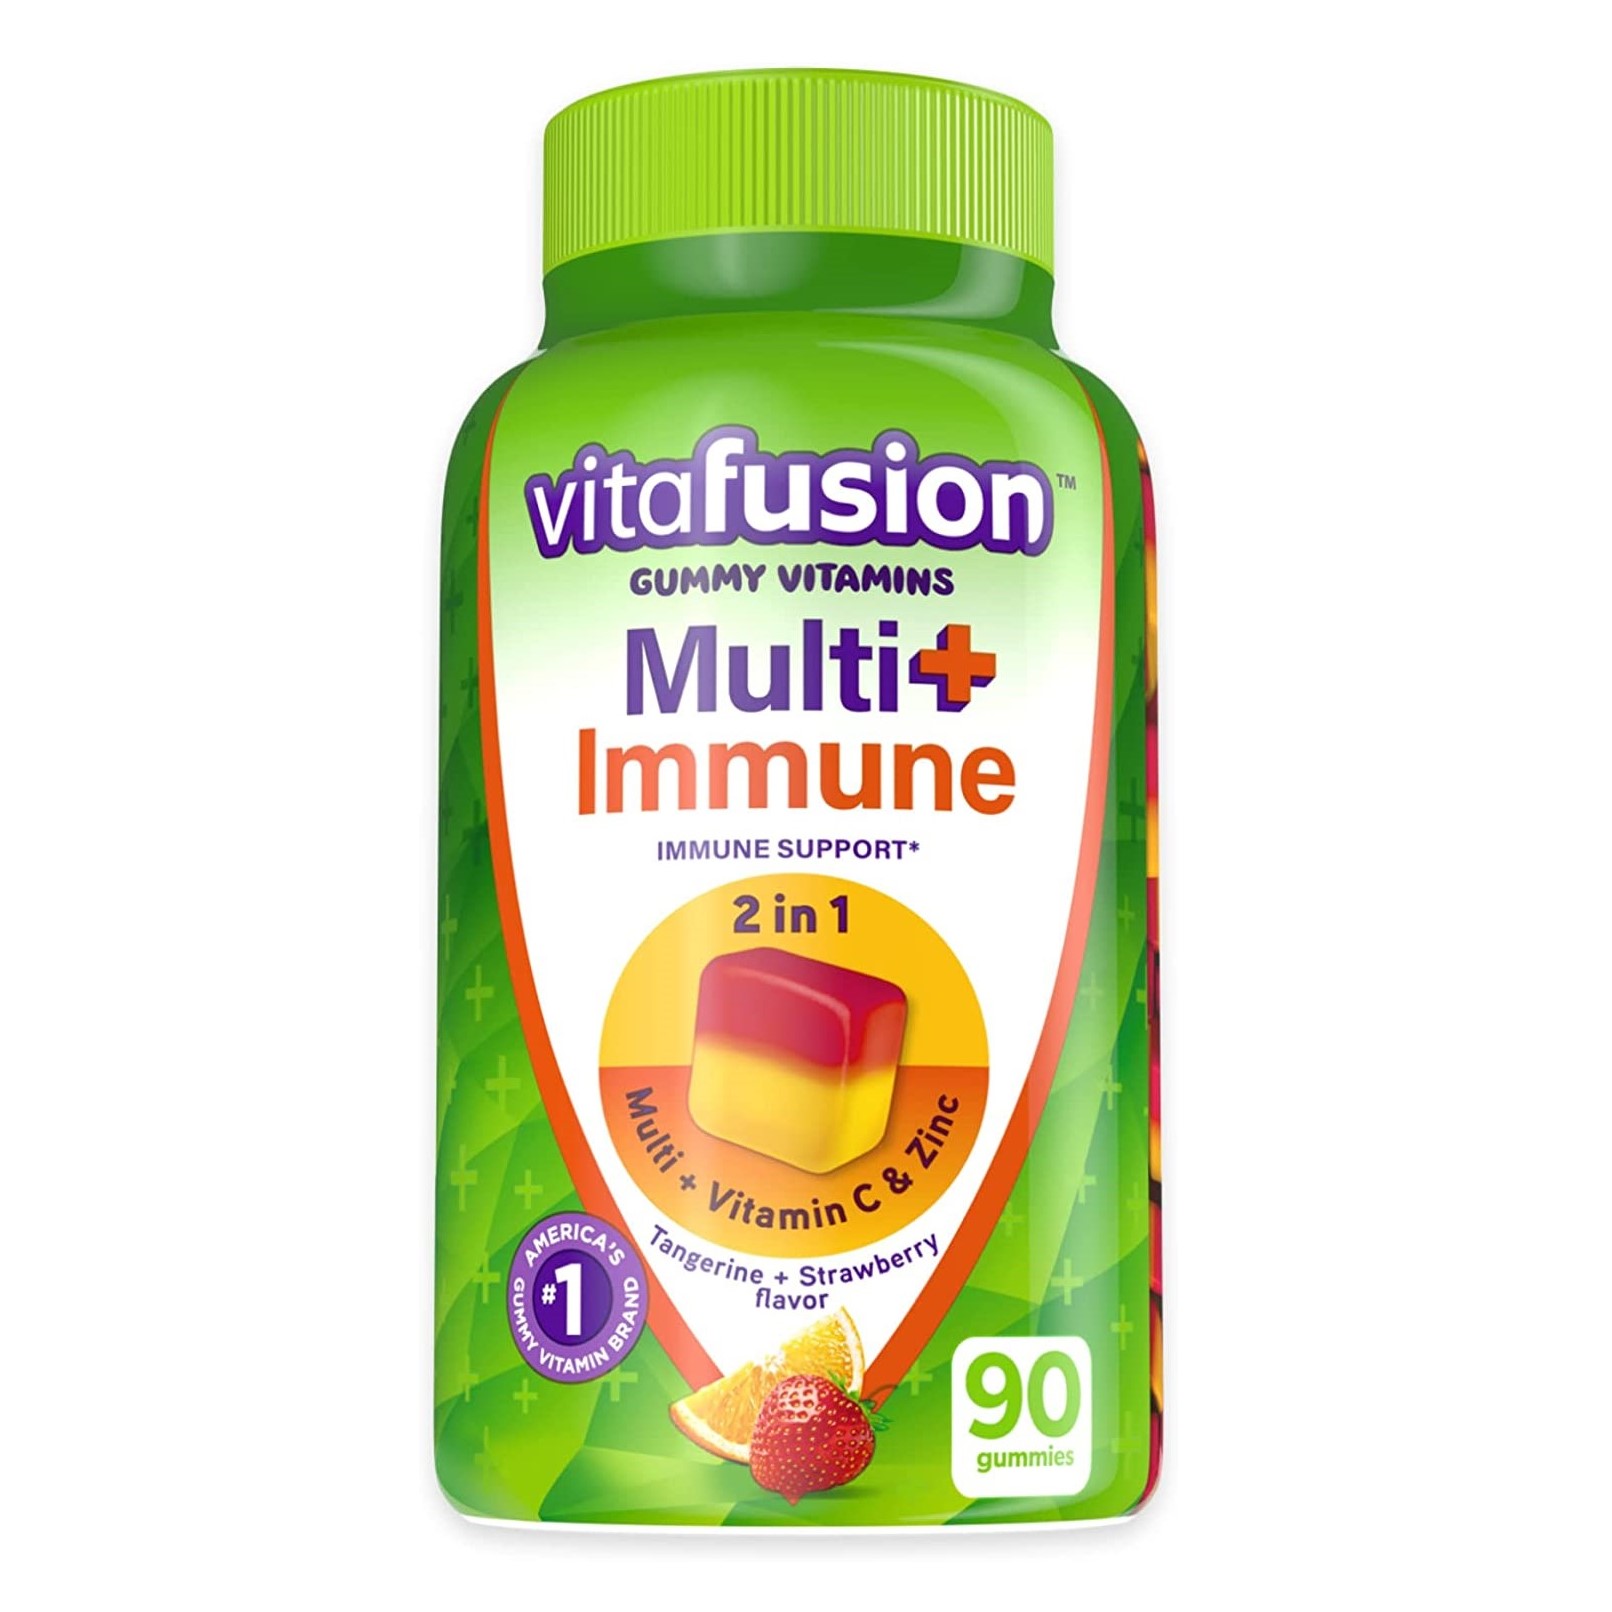 Vitafusion Multi+ Immune Support